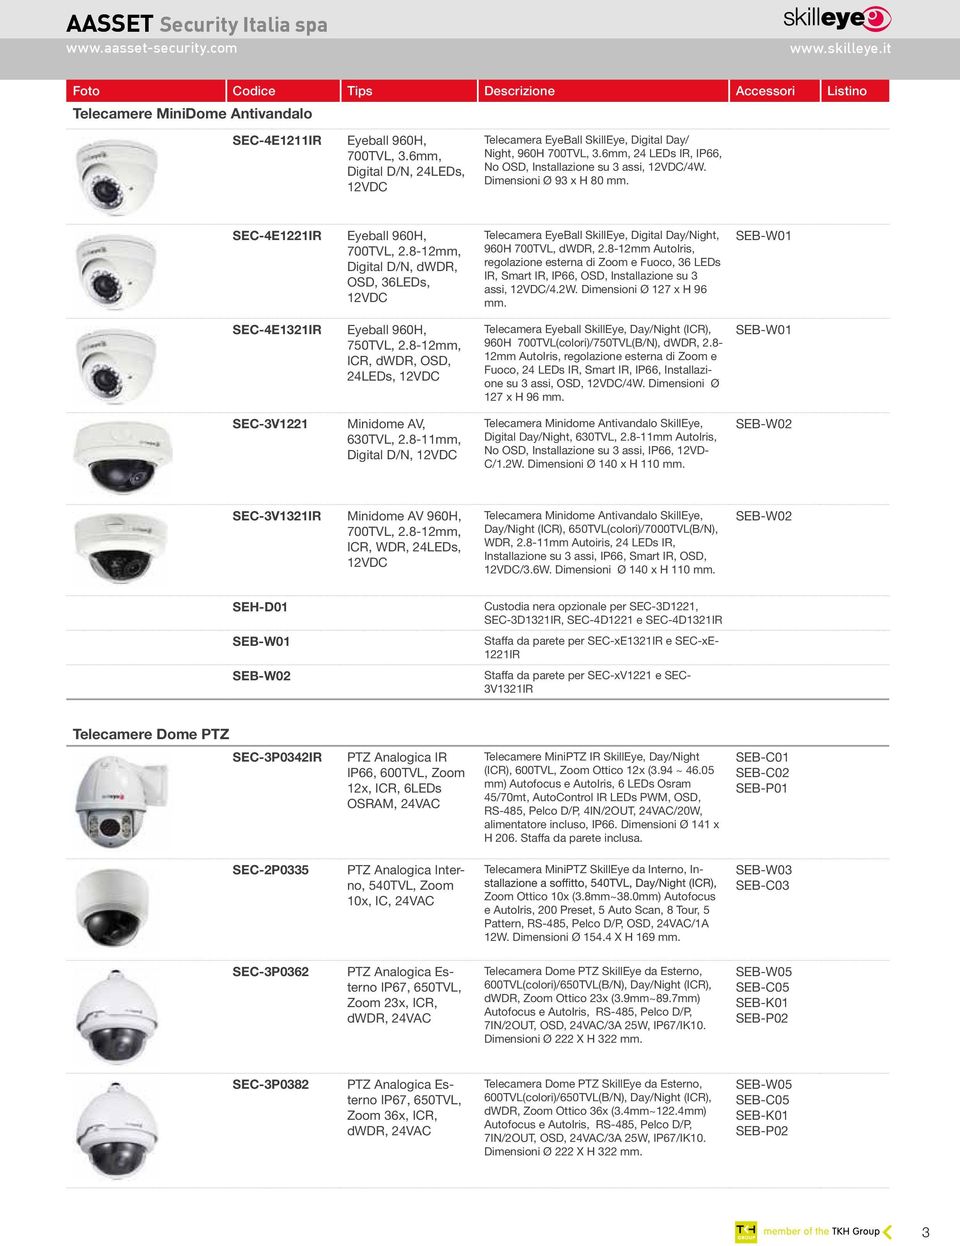 SEC-4E1221IR Eyeball 960H, 700TVL, 2.8-12mm, Digital D/N, dwdr, OSD, 36LEDs, SEC-4E1321IR Eyeball 960H, 750TVL, 2.